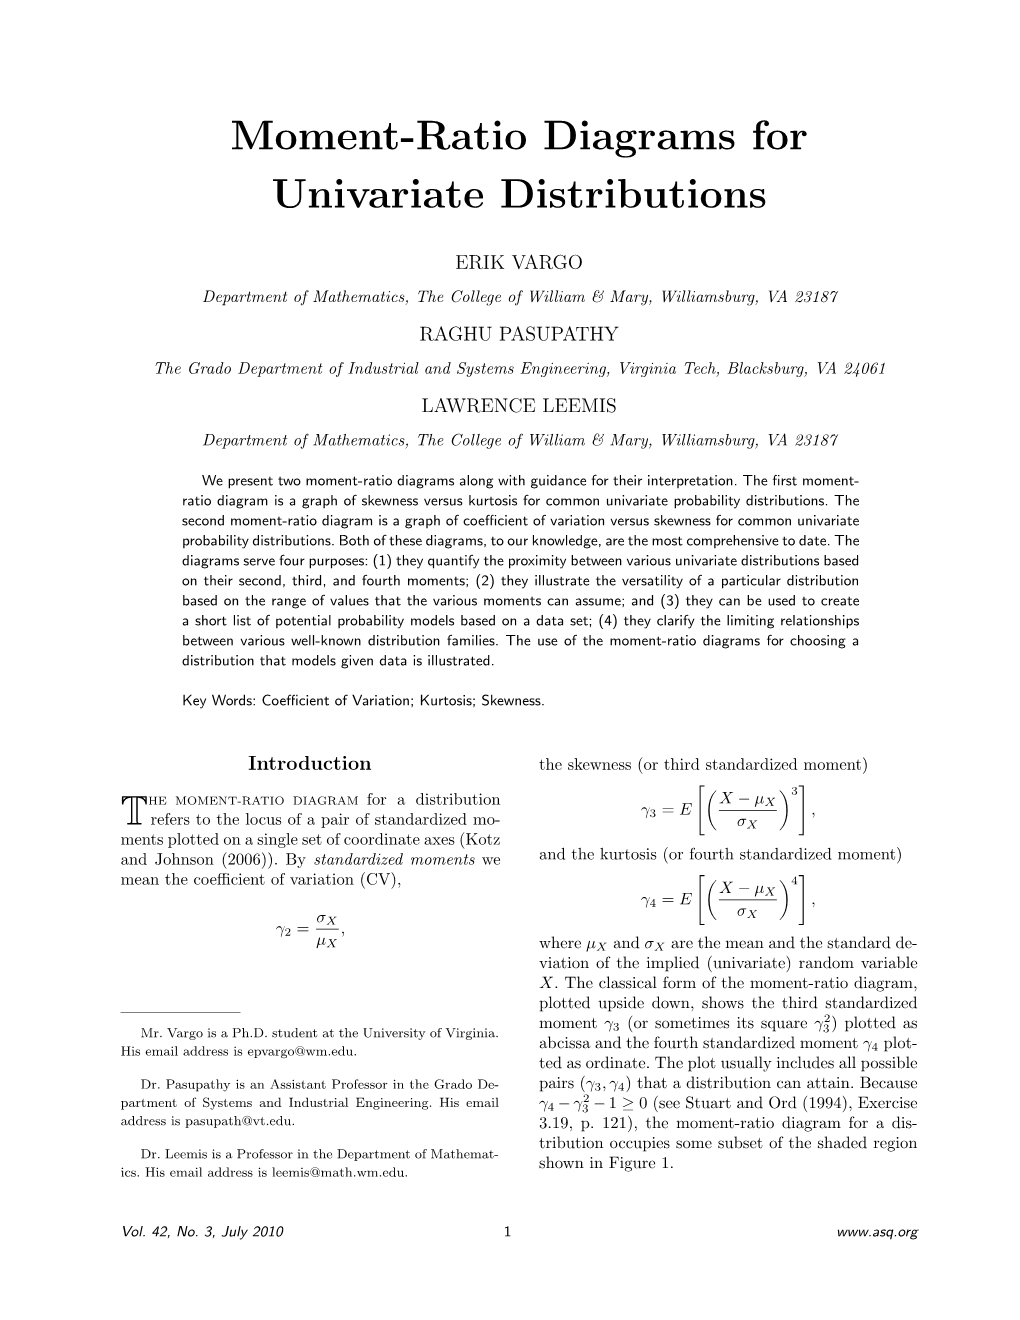 Moment-Ratio Diagrams for Univariate Distributions